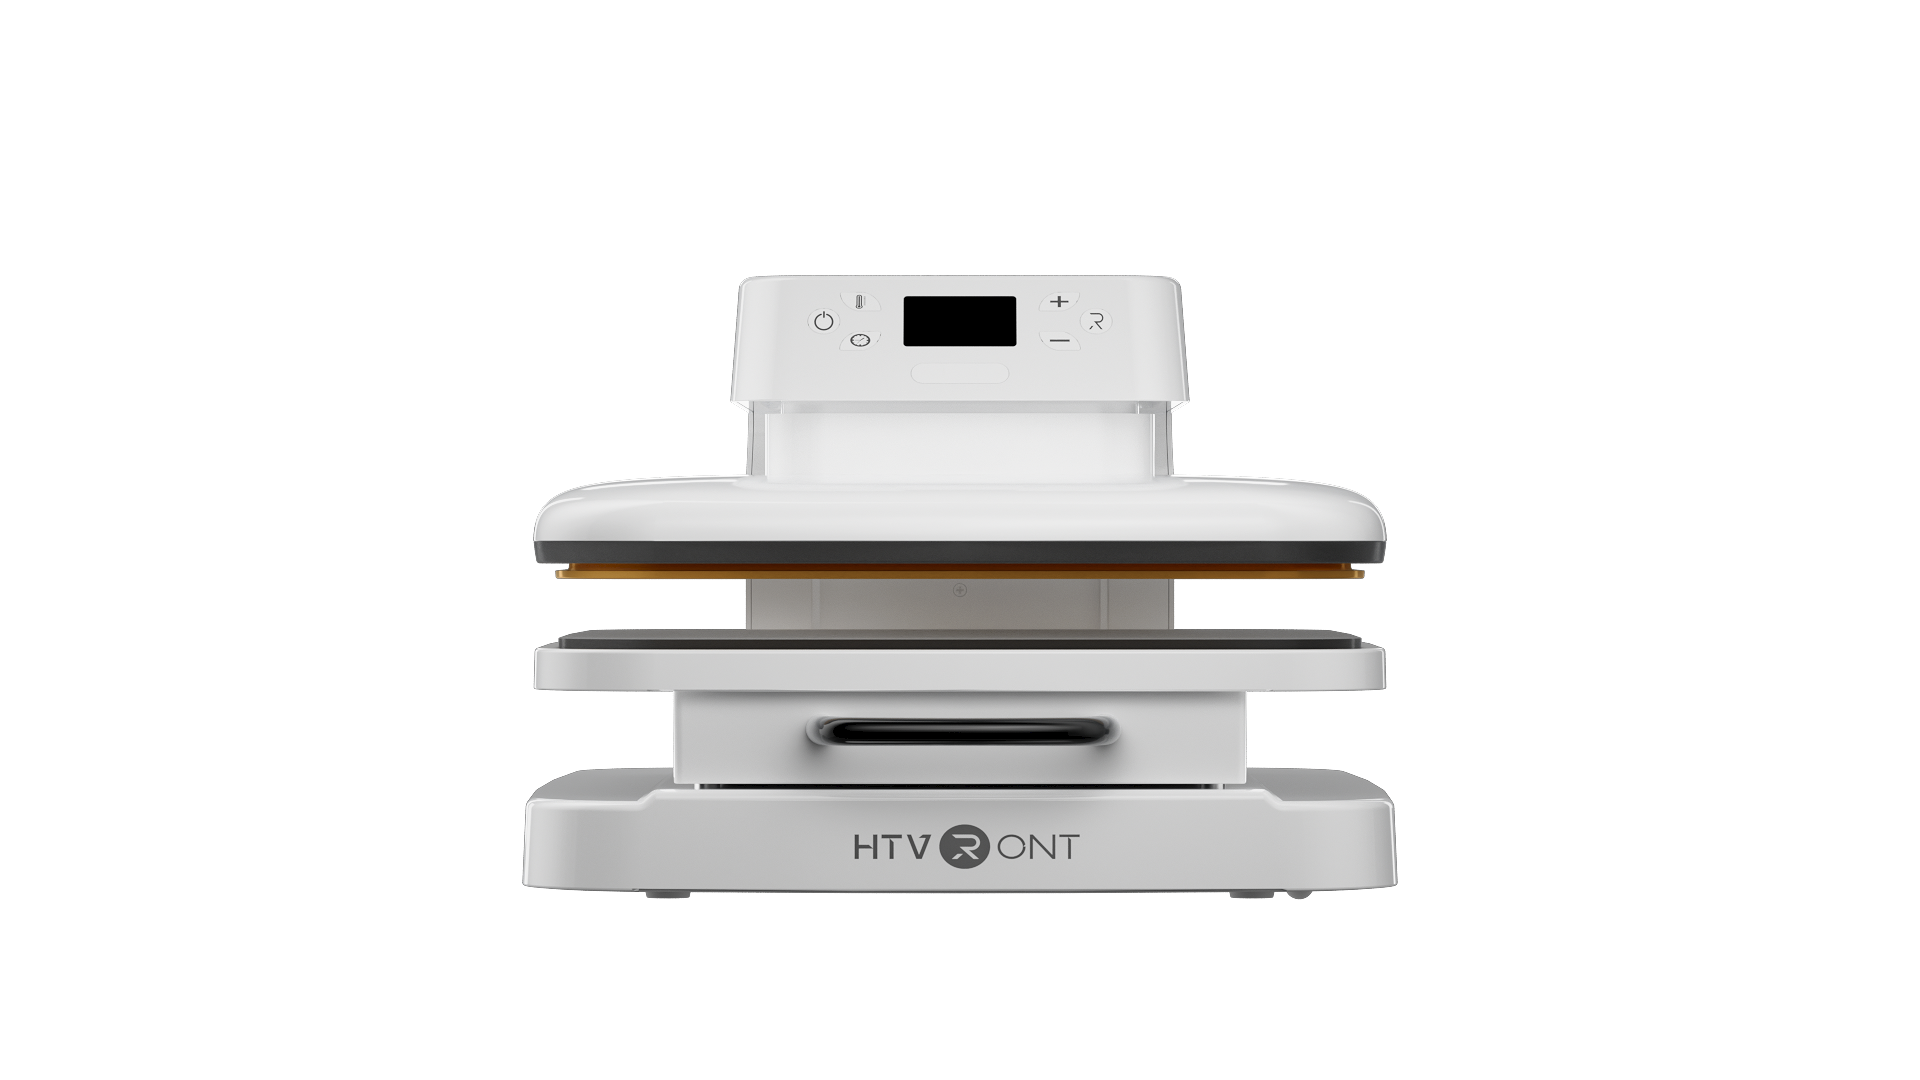 HTVRONT Announces Auto Heat Press - World's First Smart